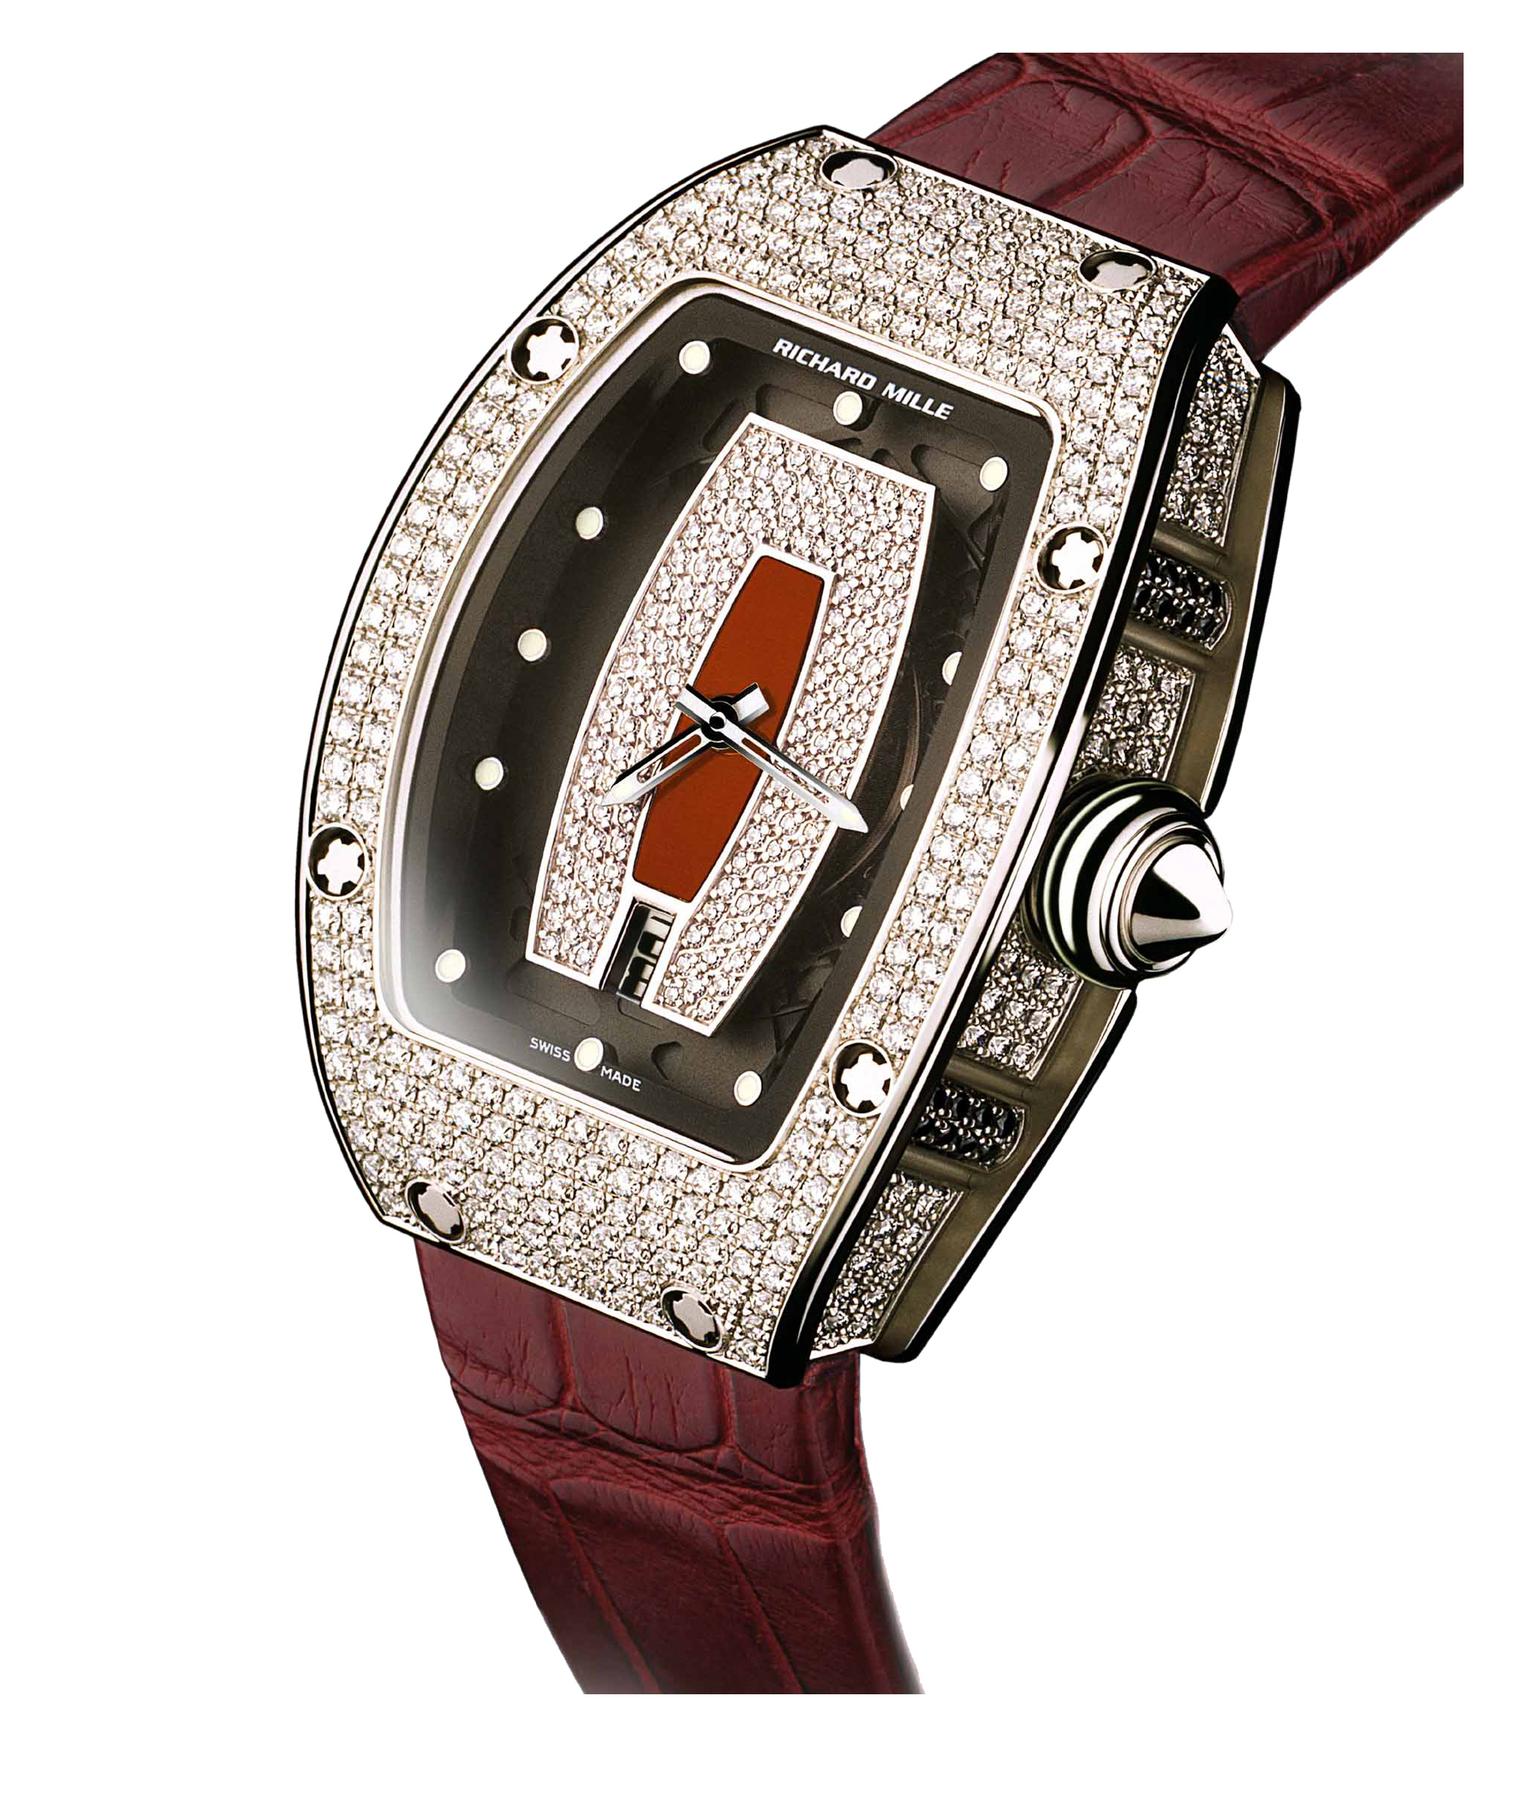 Richard Mille WG Diamond Cruncher FRONT HiRes Watch_20130927_Zoom